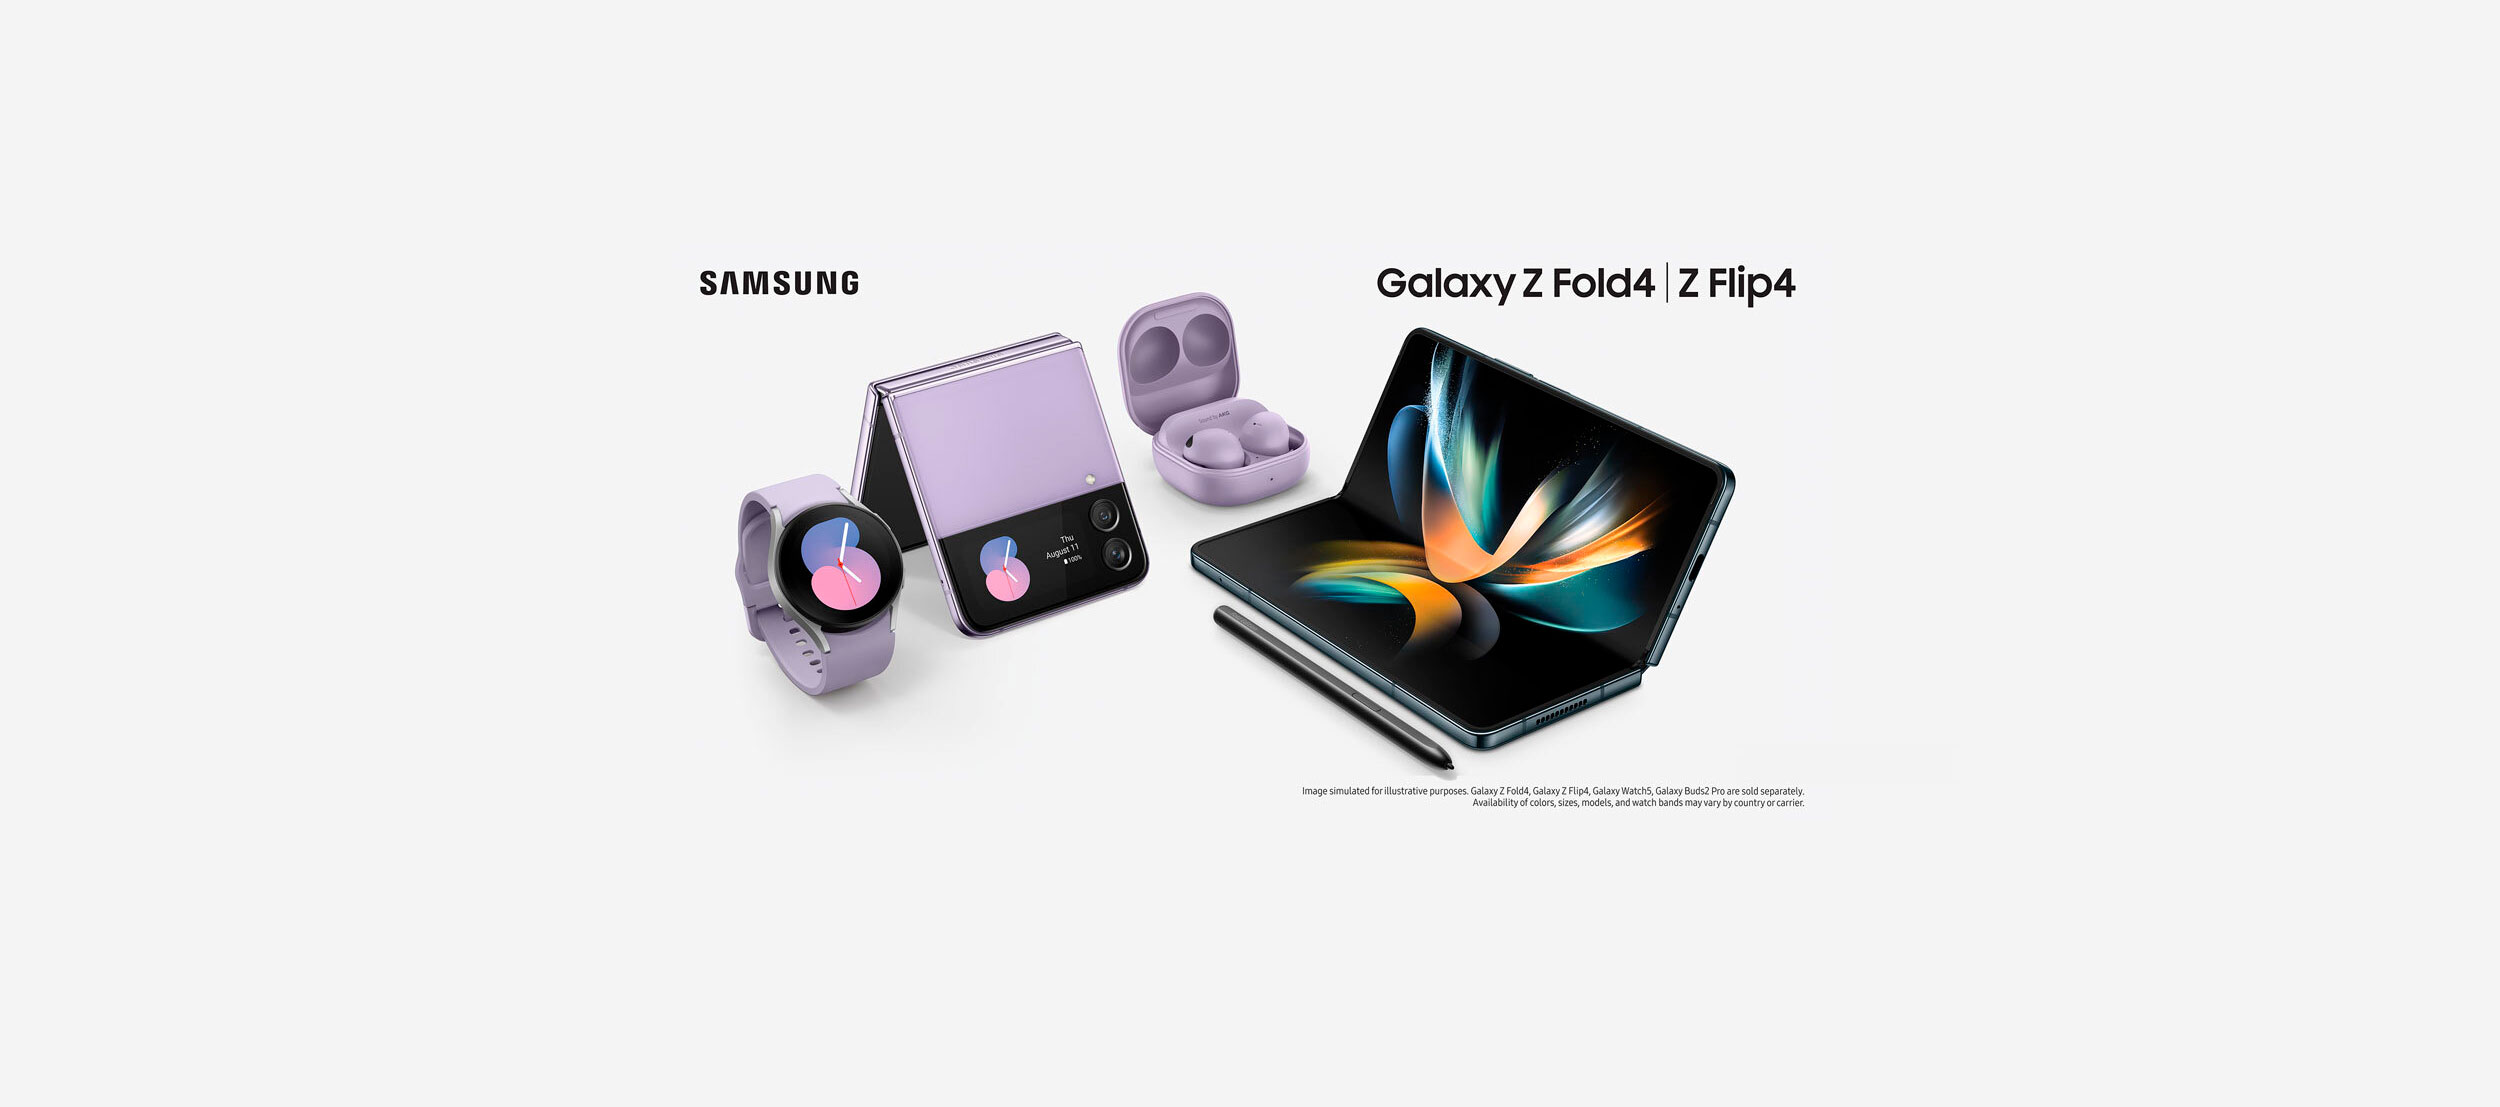 Samsung Galaxy Z Fold 4 og Galaxy Z Flip 4 er landet